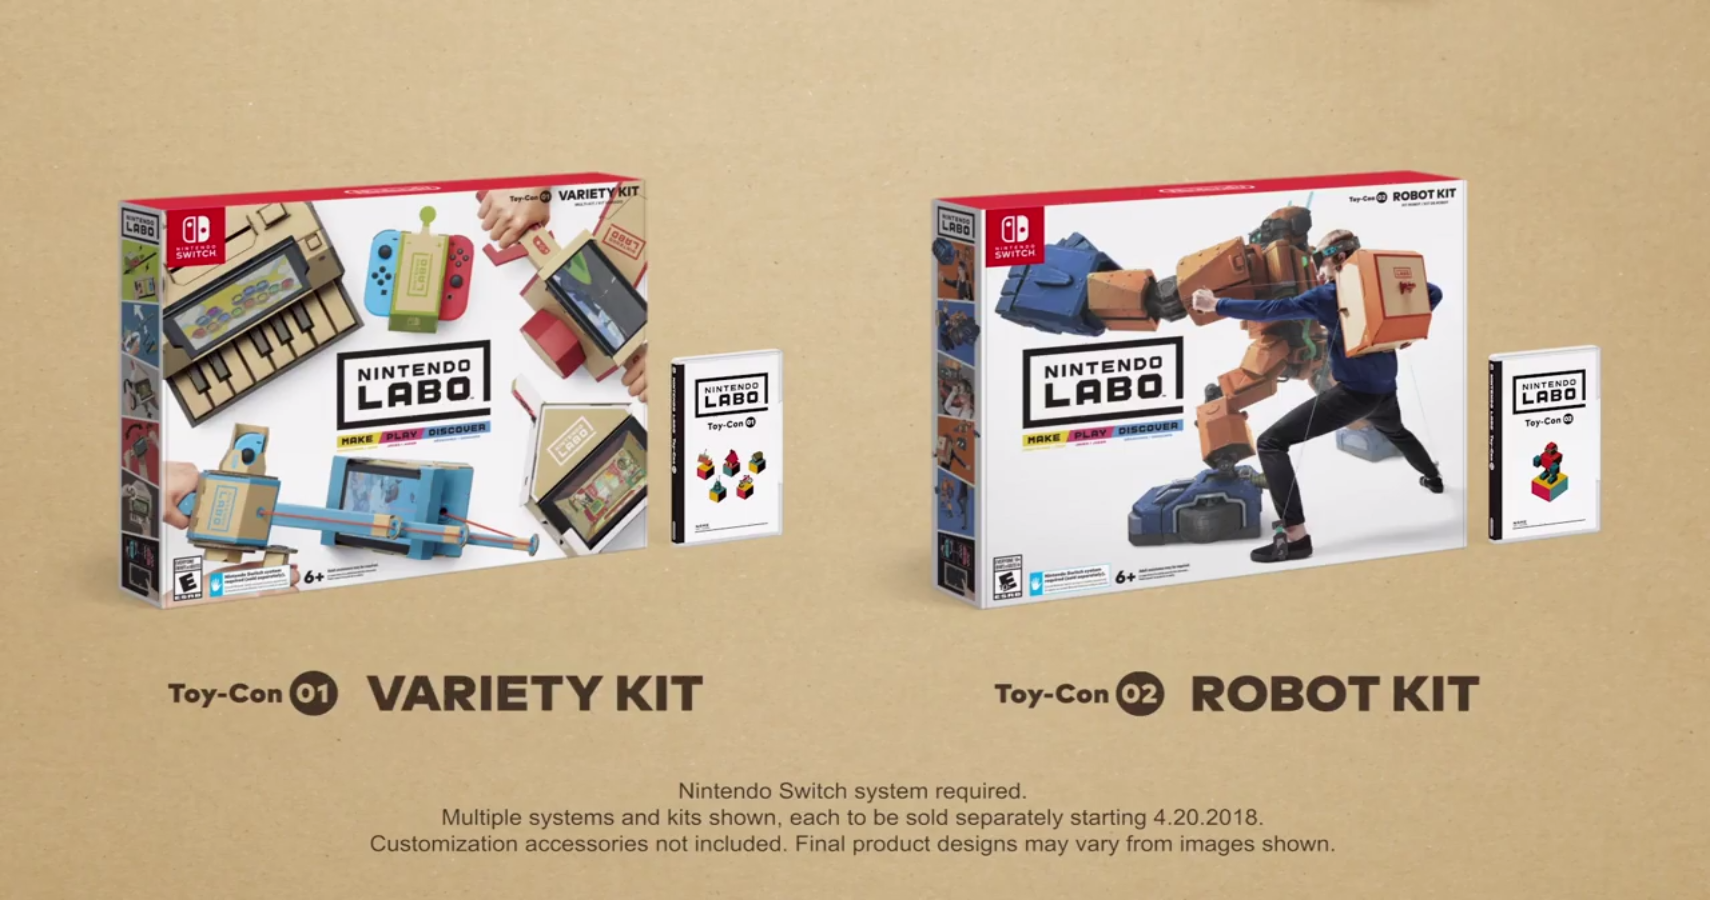 Nintendo Labo: New Set Switch-Compatible DIY Cardboard Toys